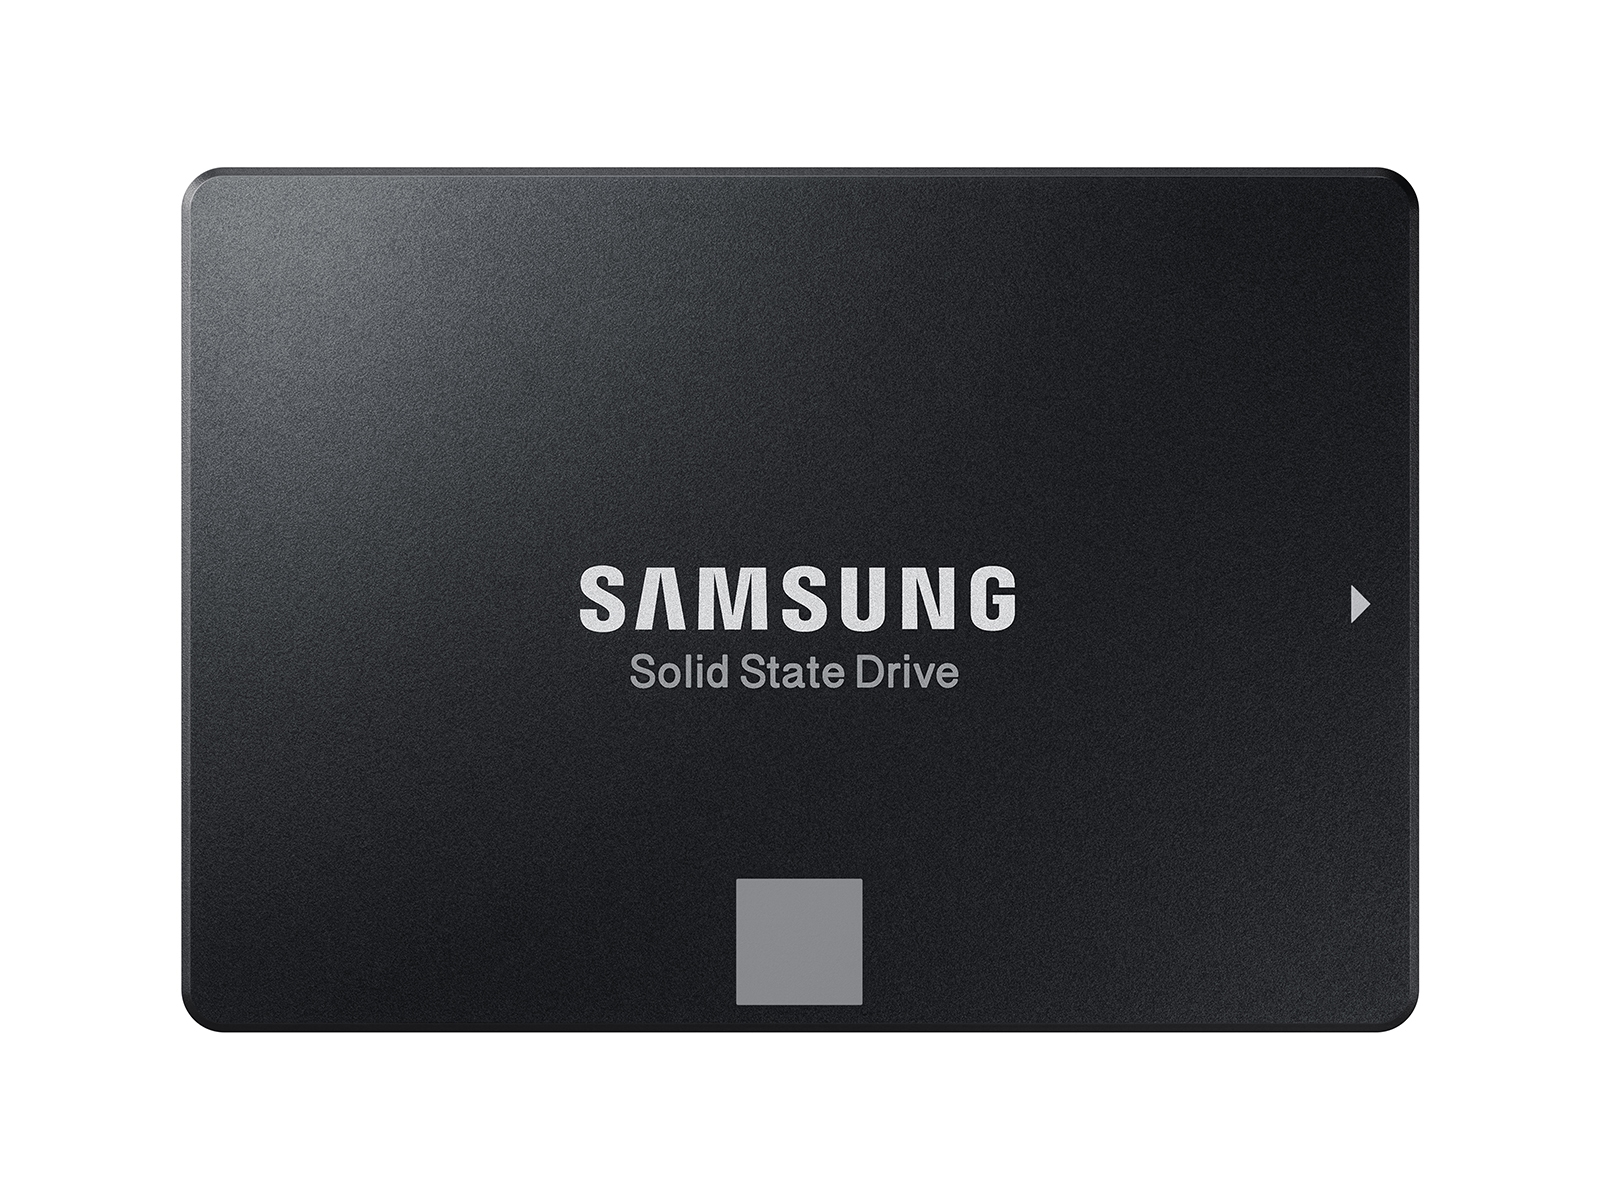 trembling Creation I think I'm sick SSD 860 EVO 2.5" SATA III 250GB Memory & Storage - MZ-76E250B/AM | Samsung  US